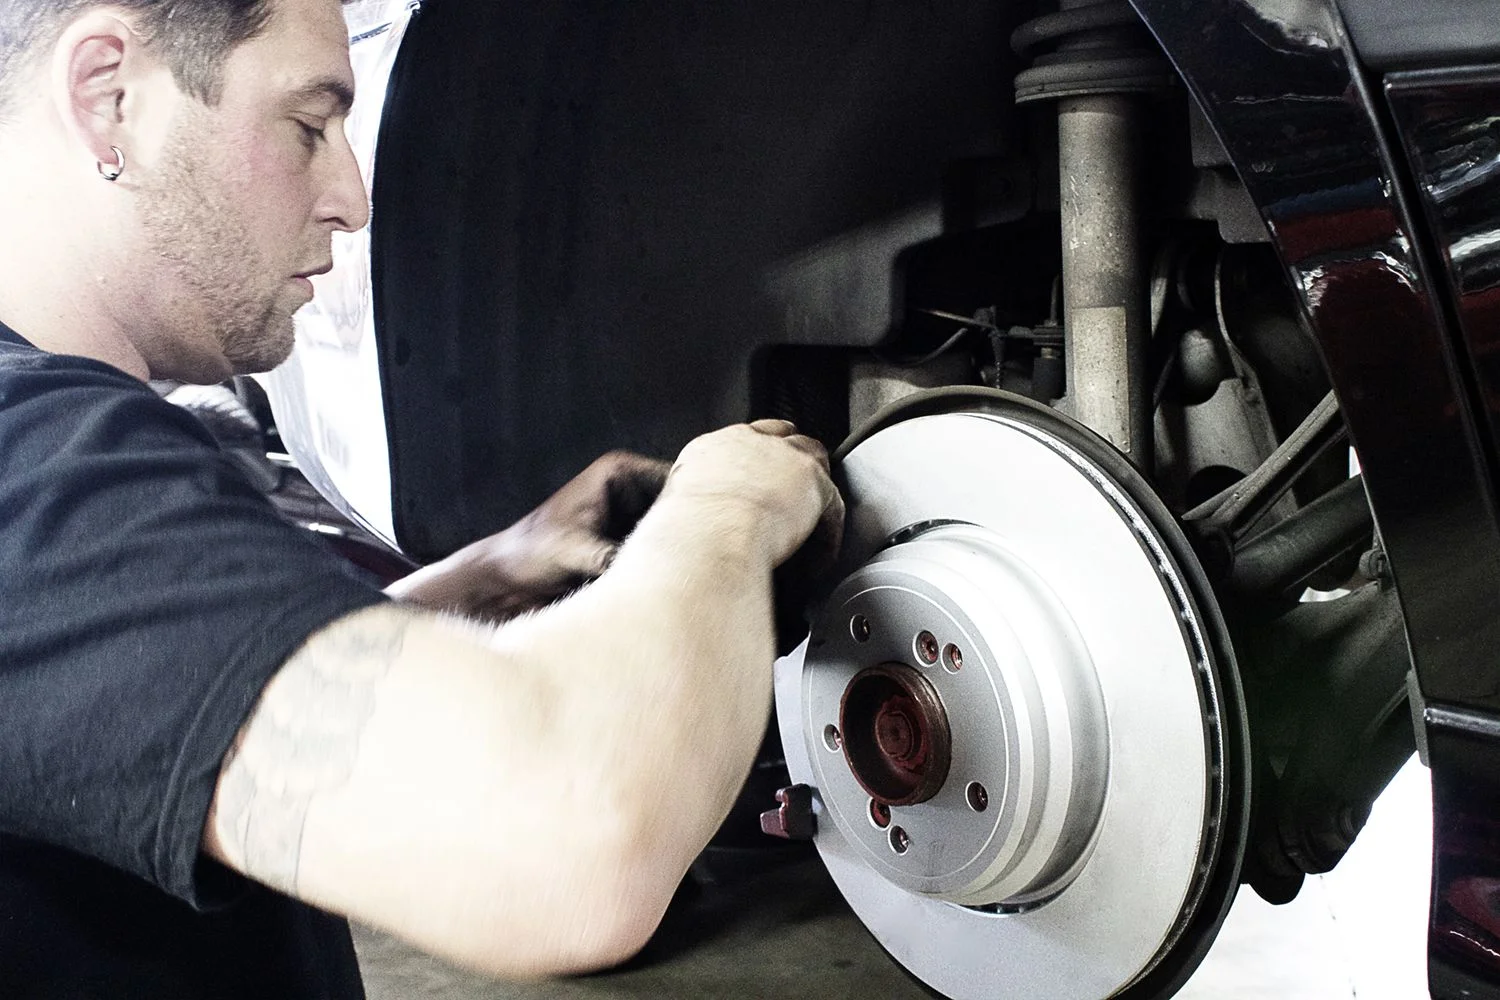 Autobahn Automotive owner Zach installing brake calipers